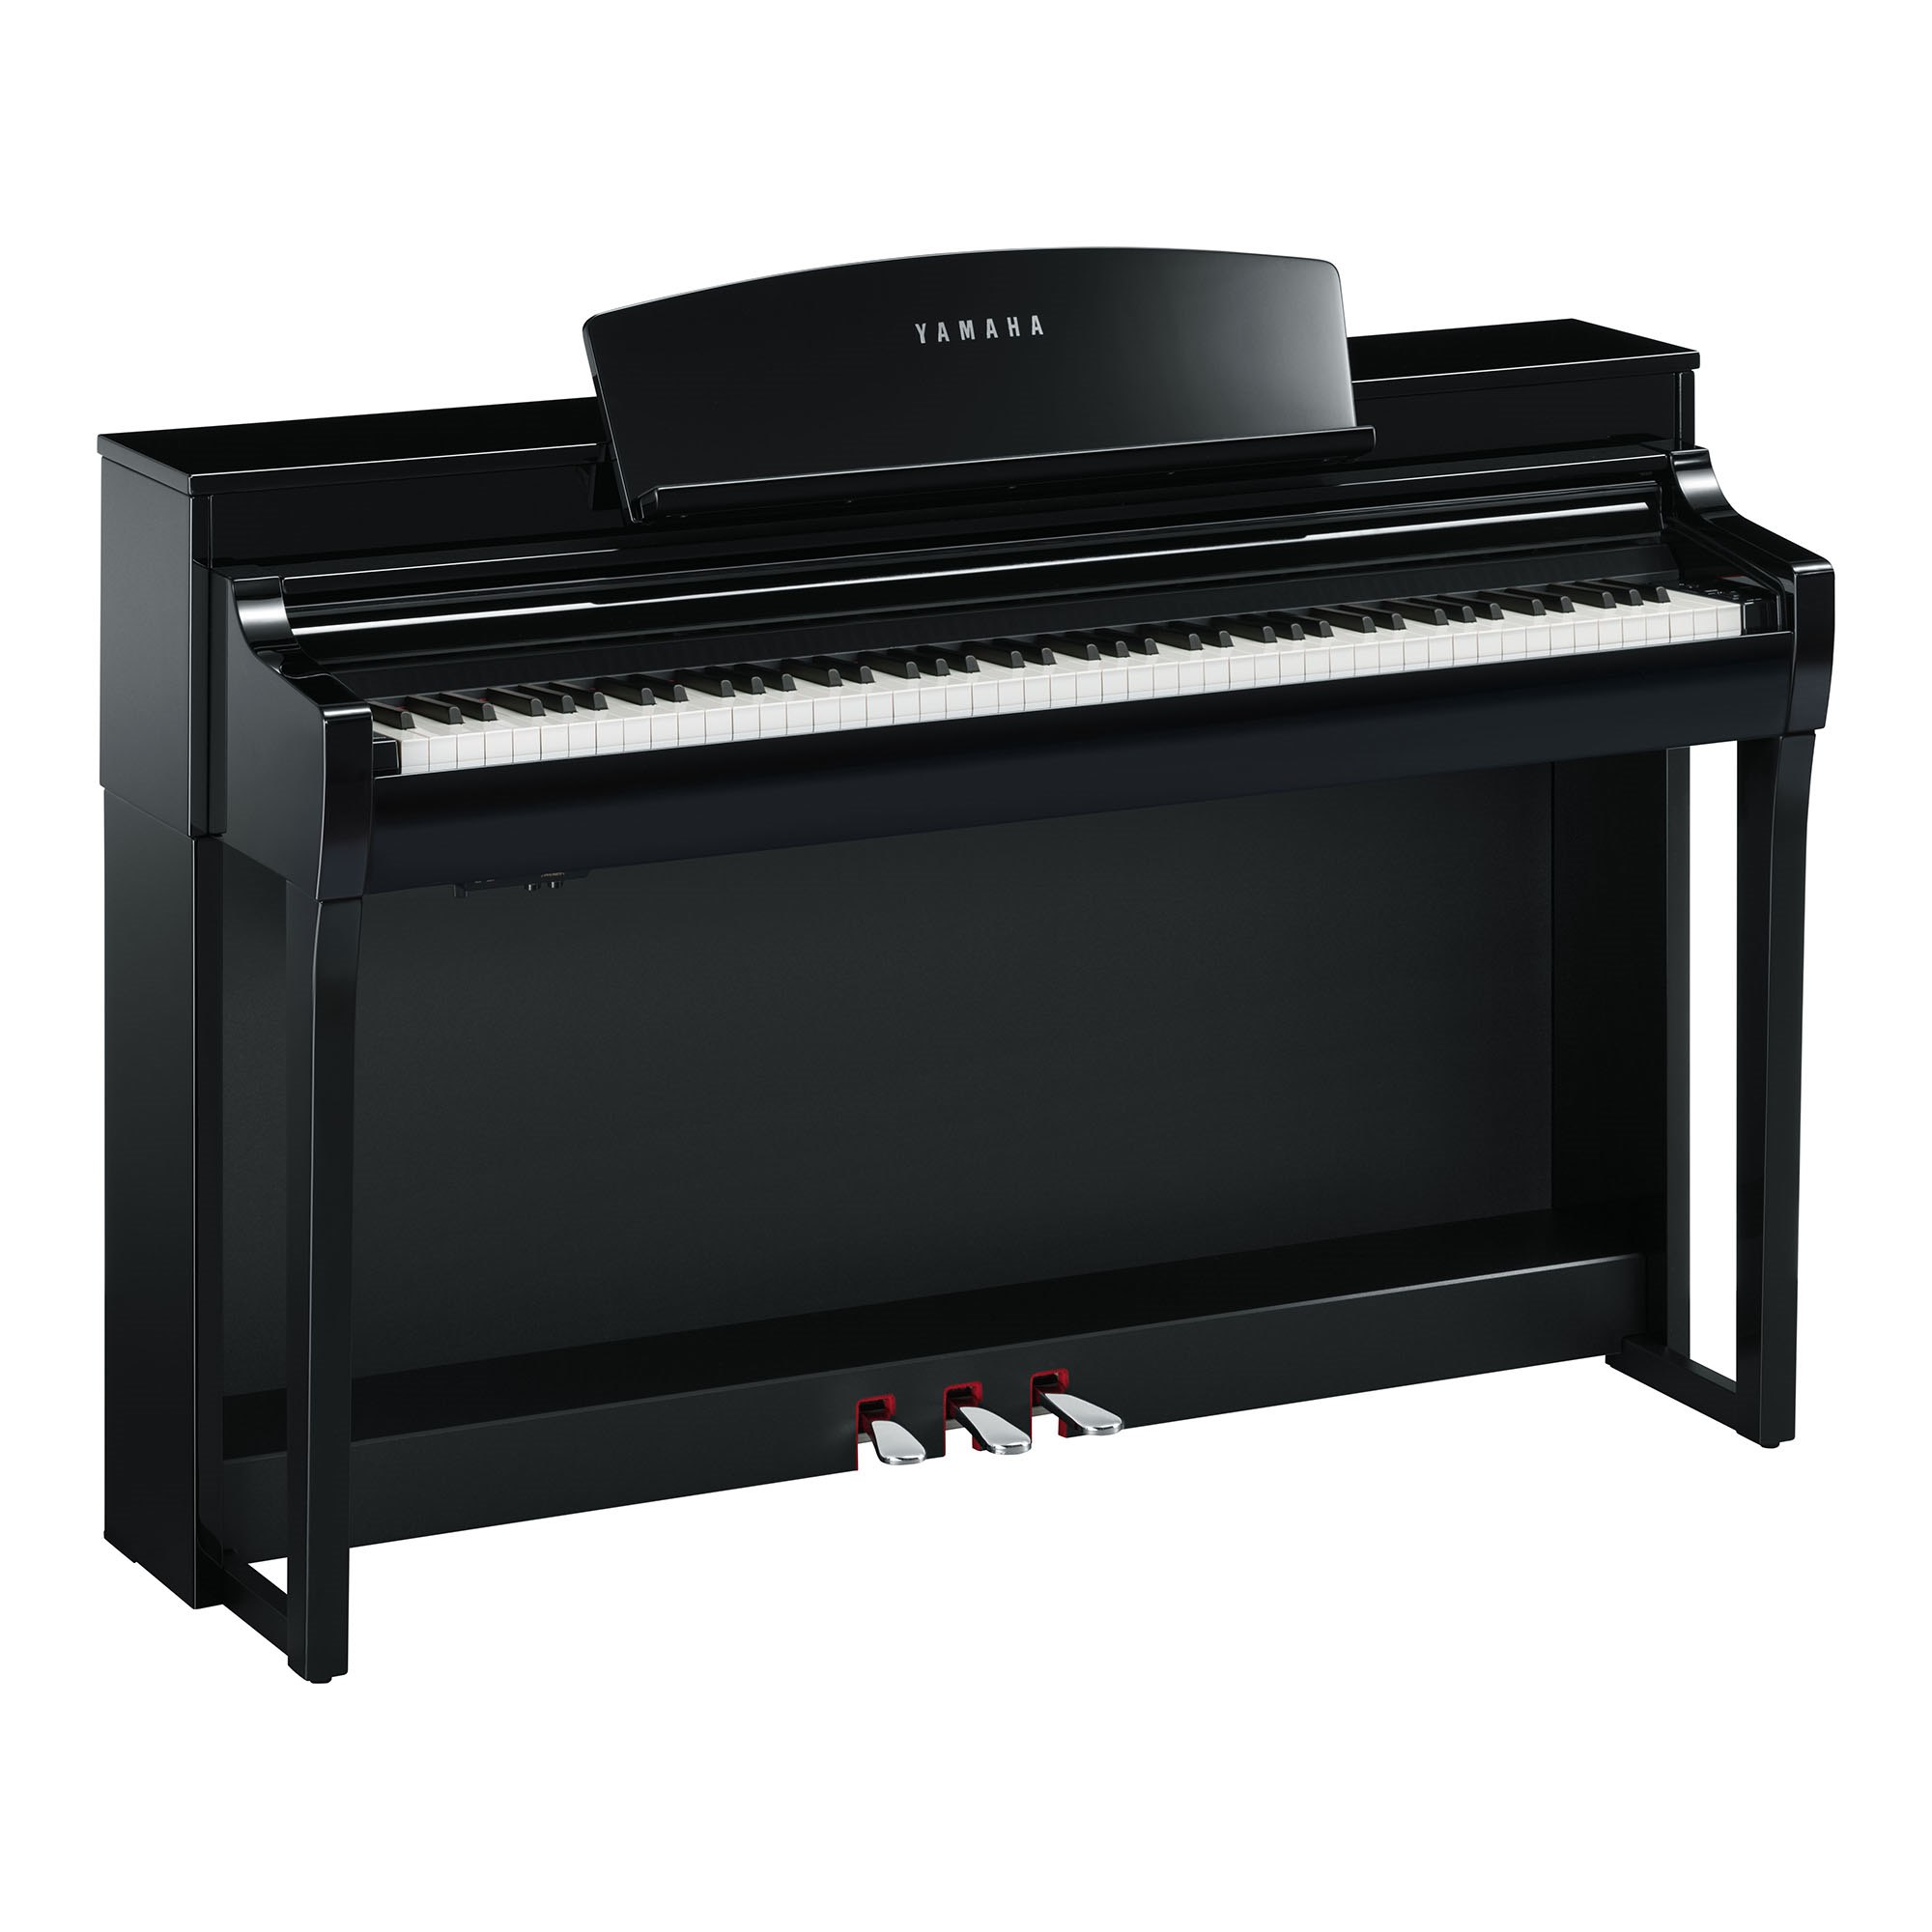 Clavinova - Pianos - Musikkinstrumenter - Produkter - Yamaha - Norge